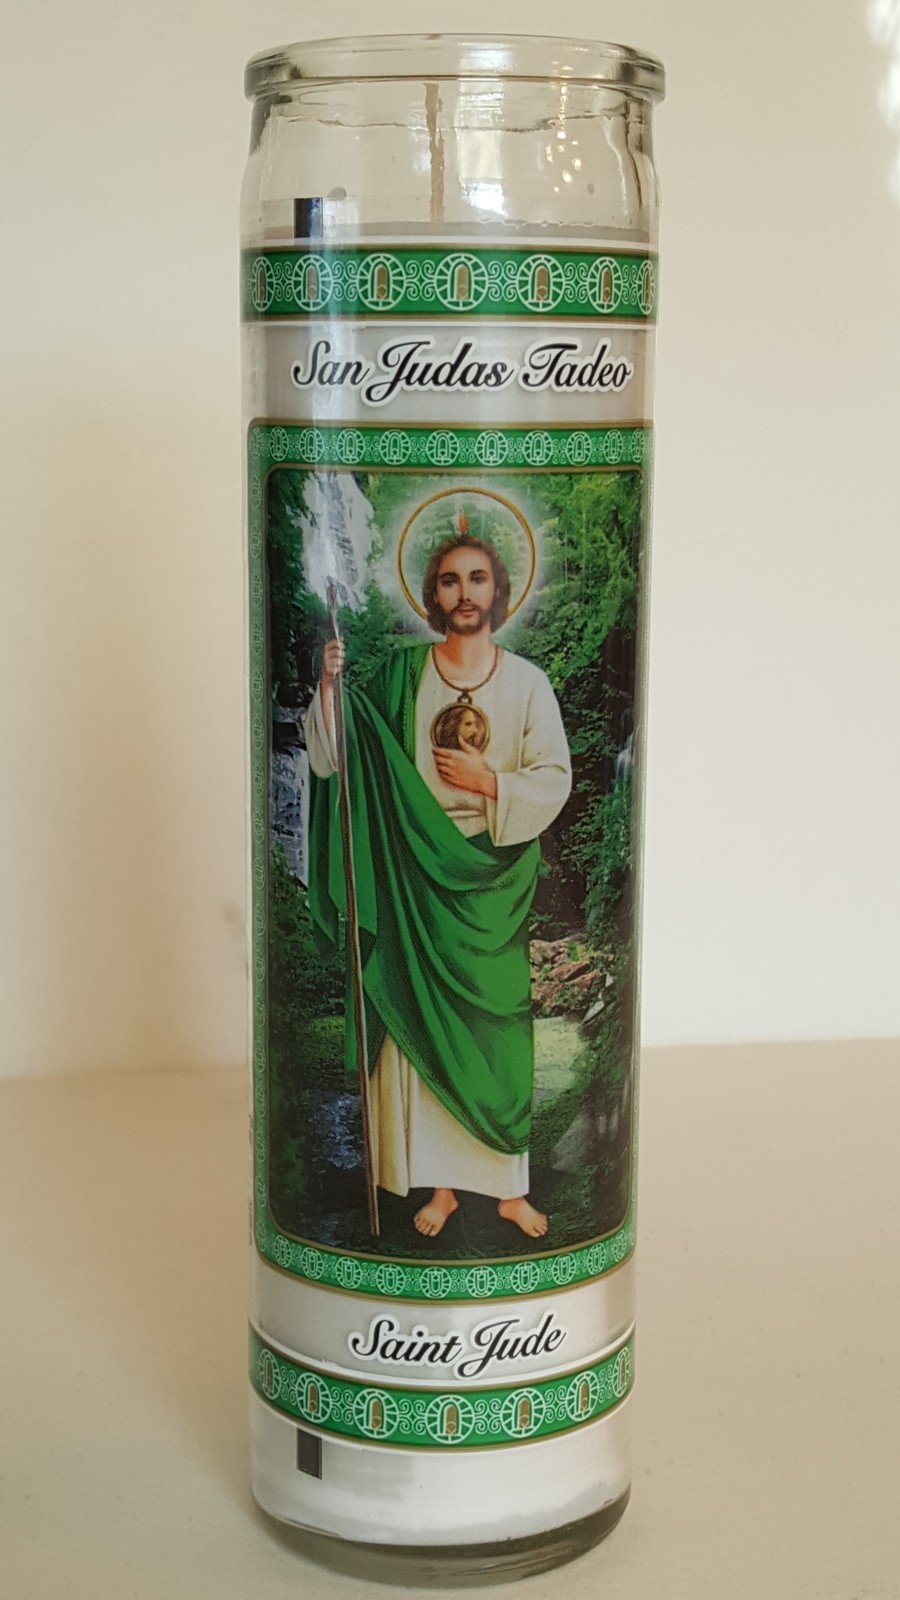 San Judas Tadeo (Saint Jude) Devotional Candle - image 1 of 3